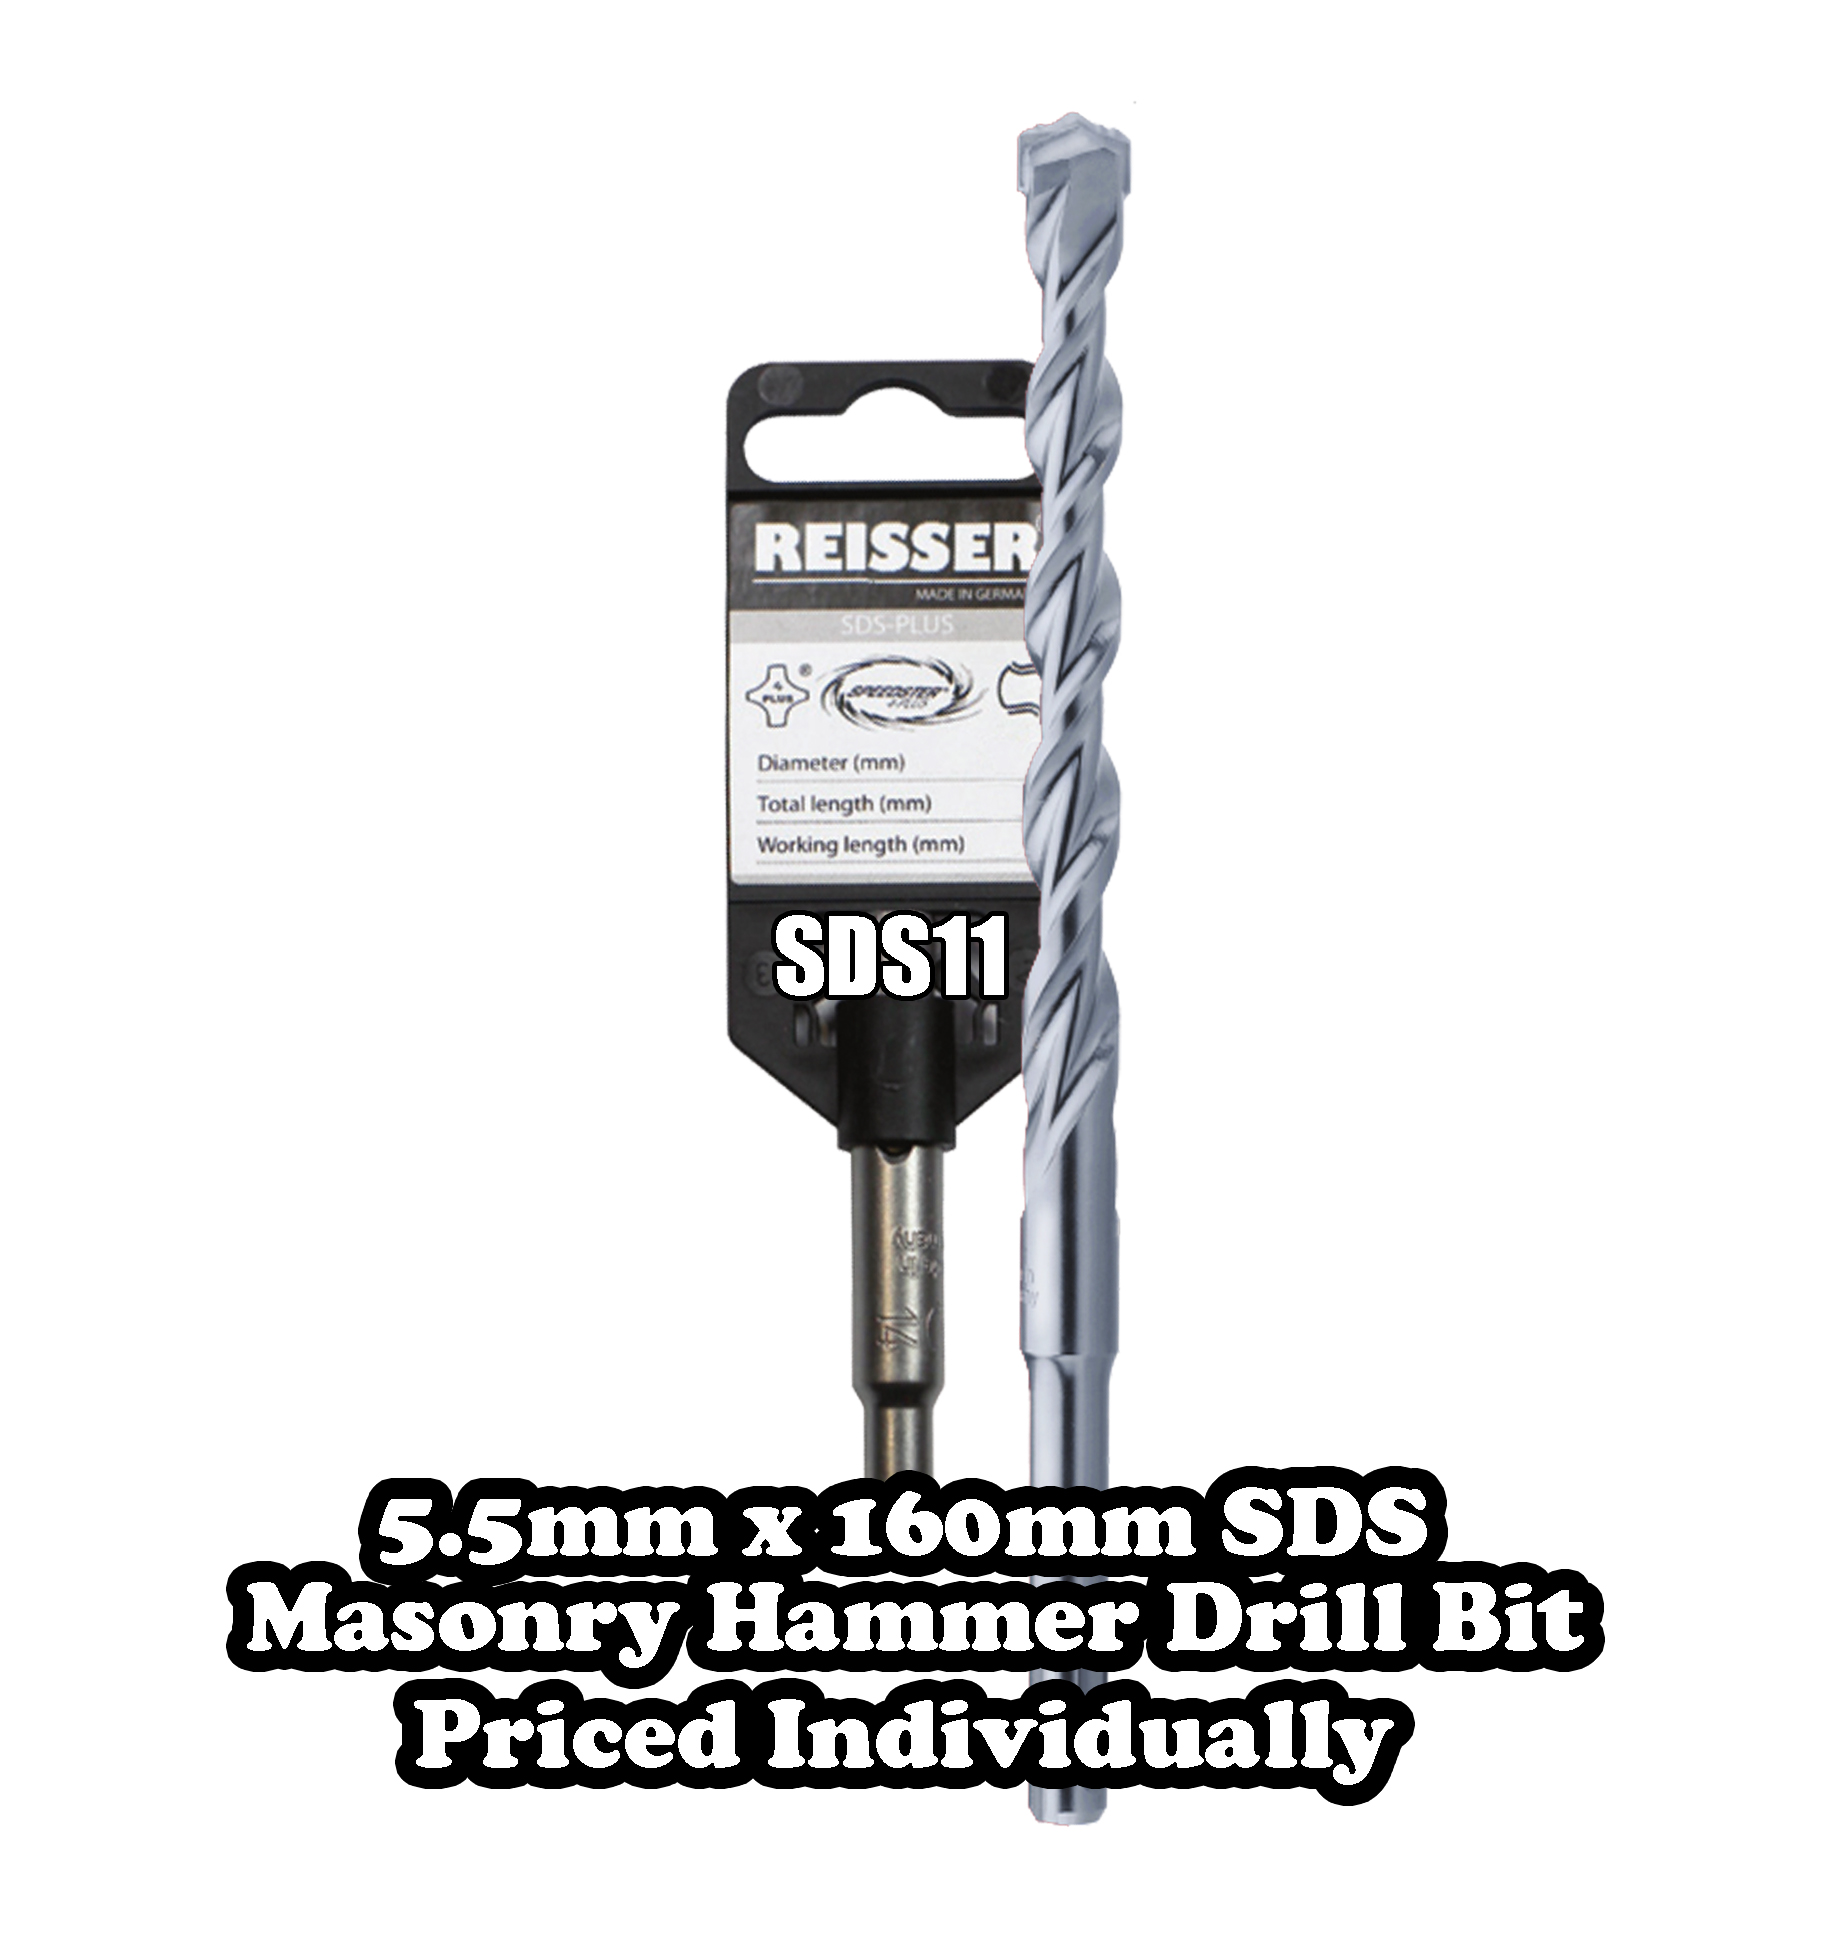 5.5mm x 160mm SDS Masonry Hammer Drill Bit